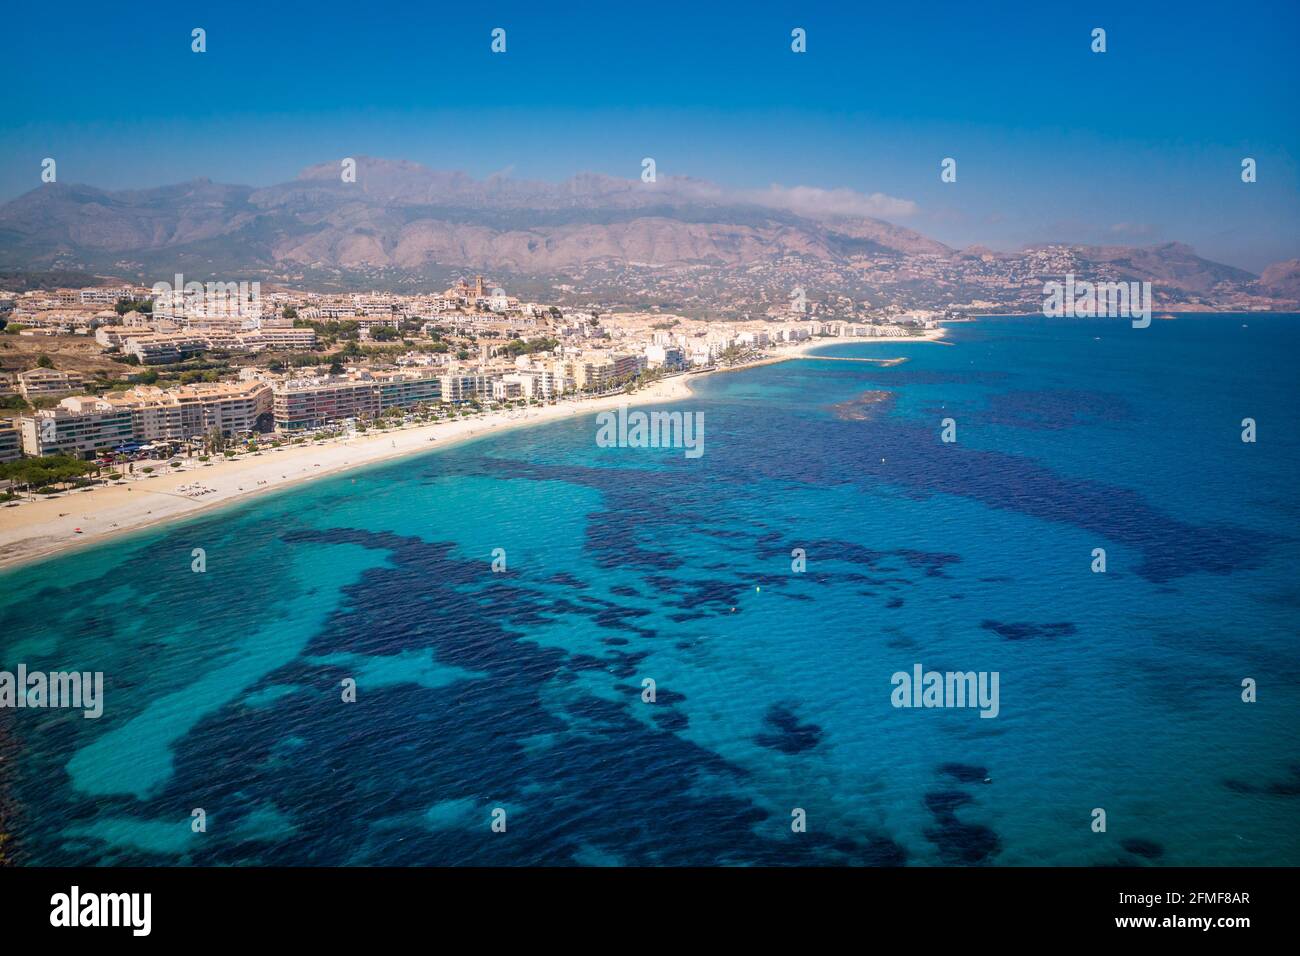 Sunny day, Summer, Spanish Mediterranean Sea Coast Landscape. Beach with turquoise water. Touristic sun and beach landmark in Alicante, Spain Stock Photo